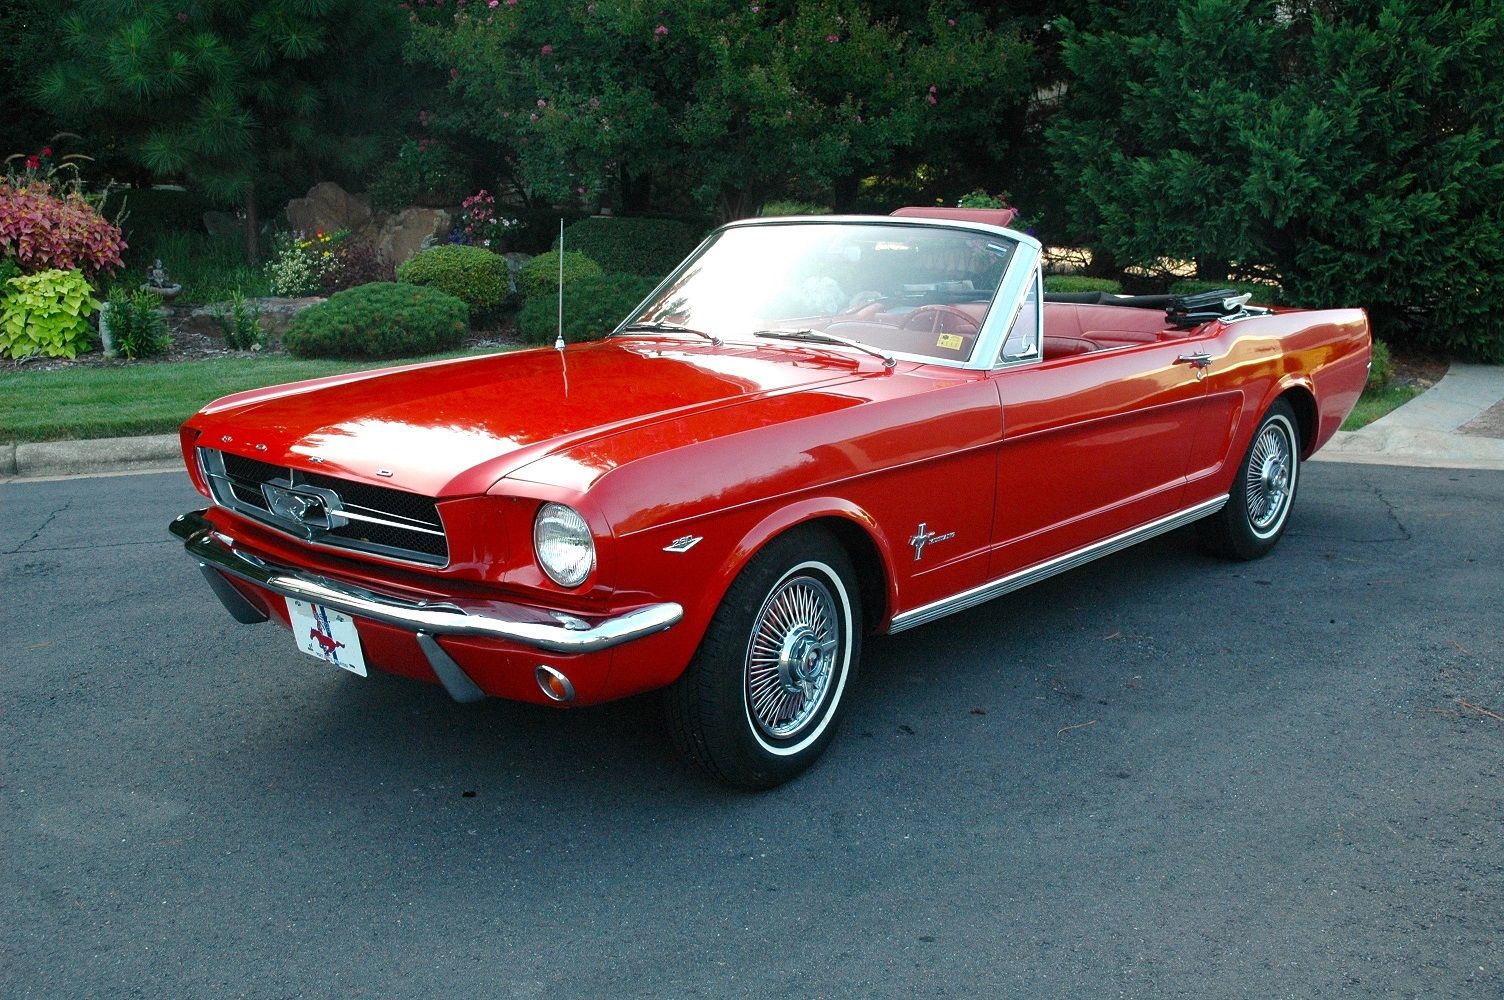 Red 1964 1/2 Mustang